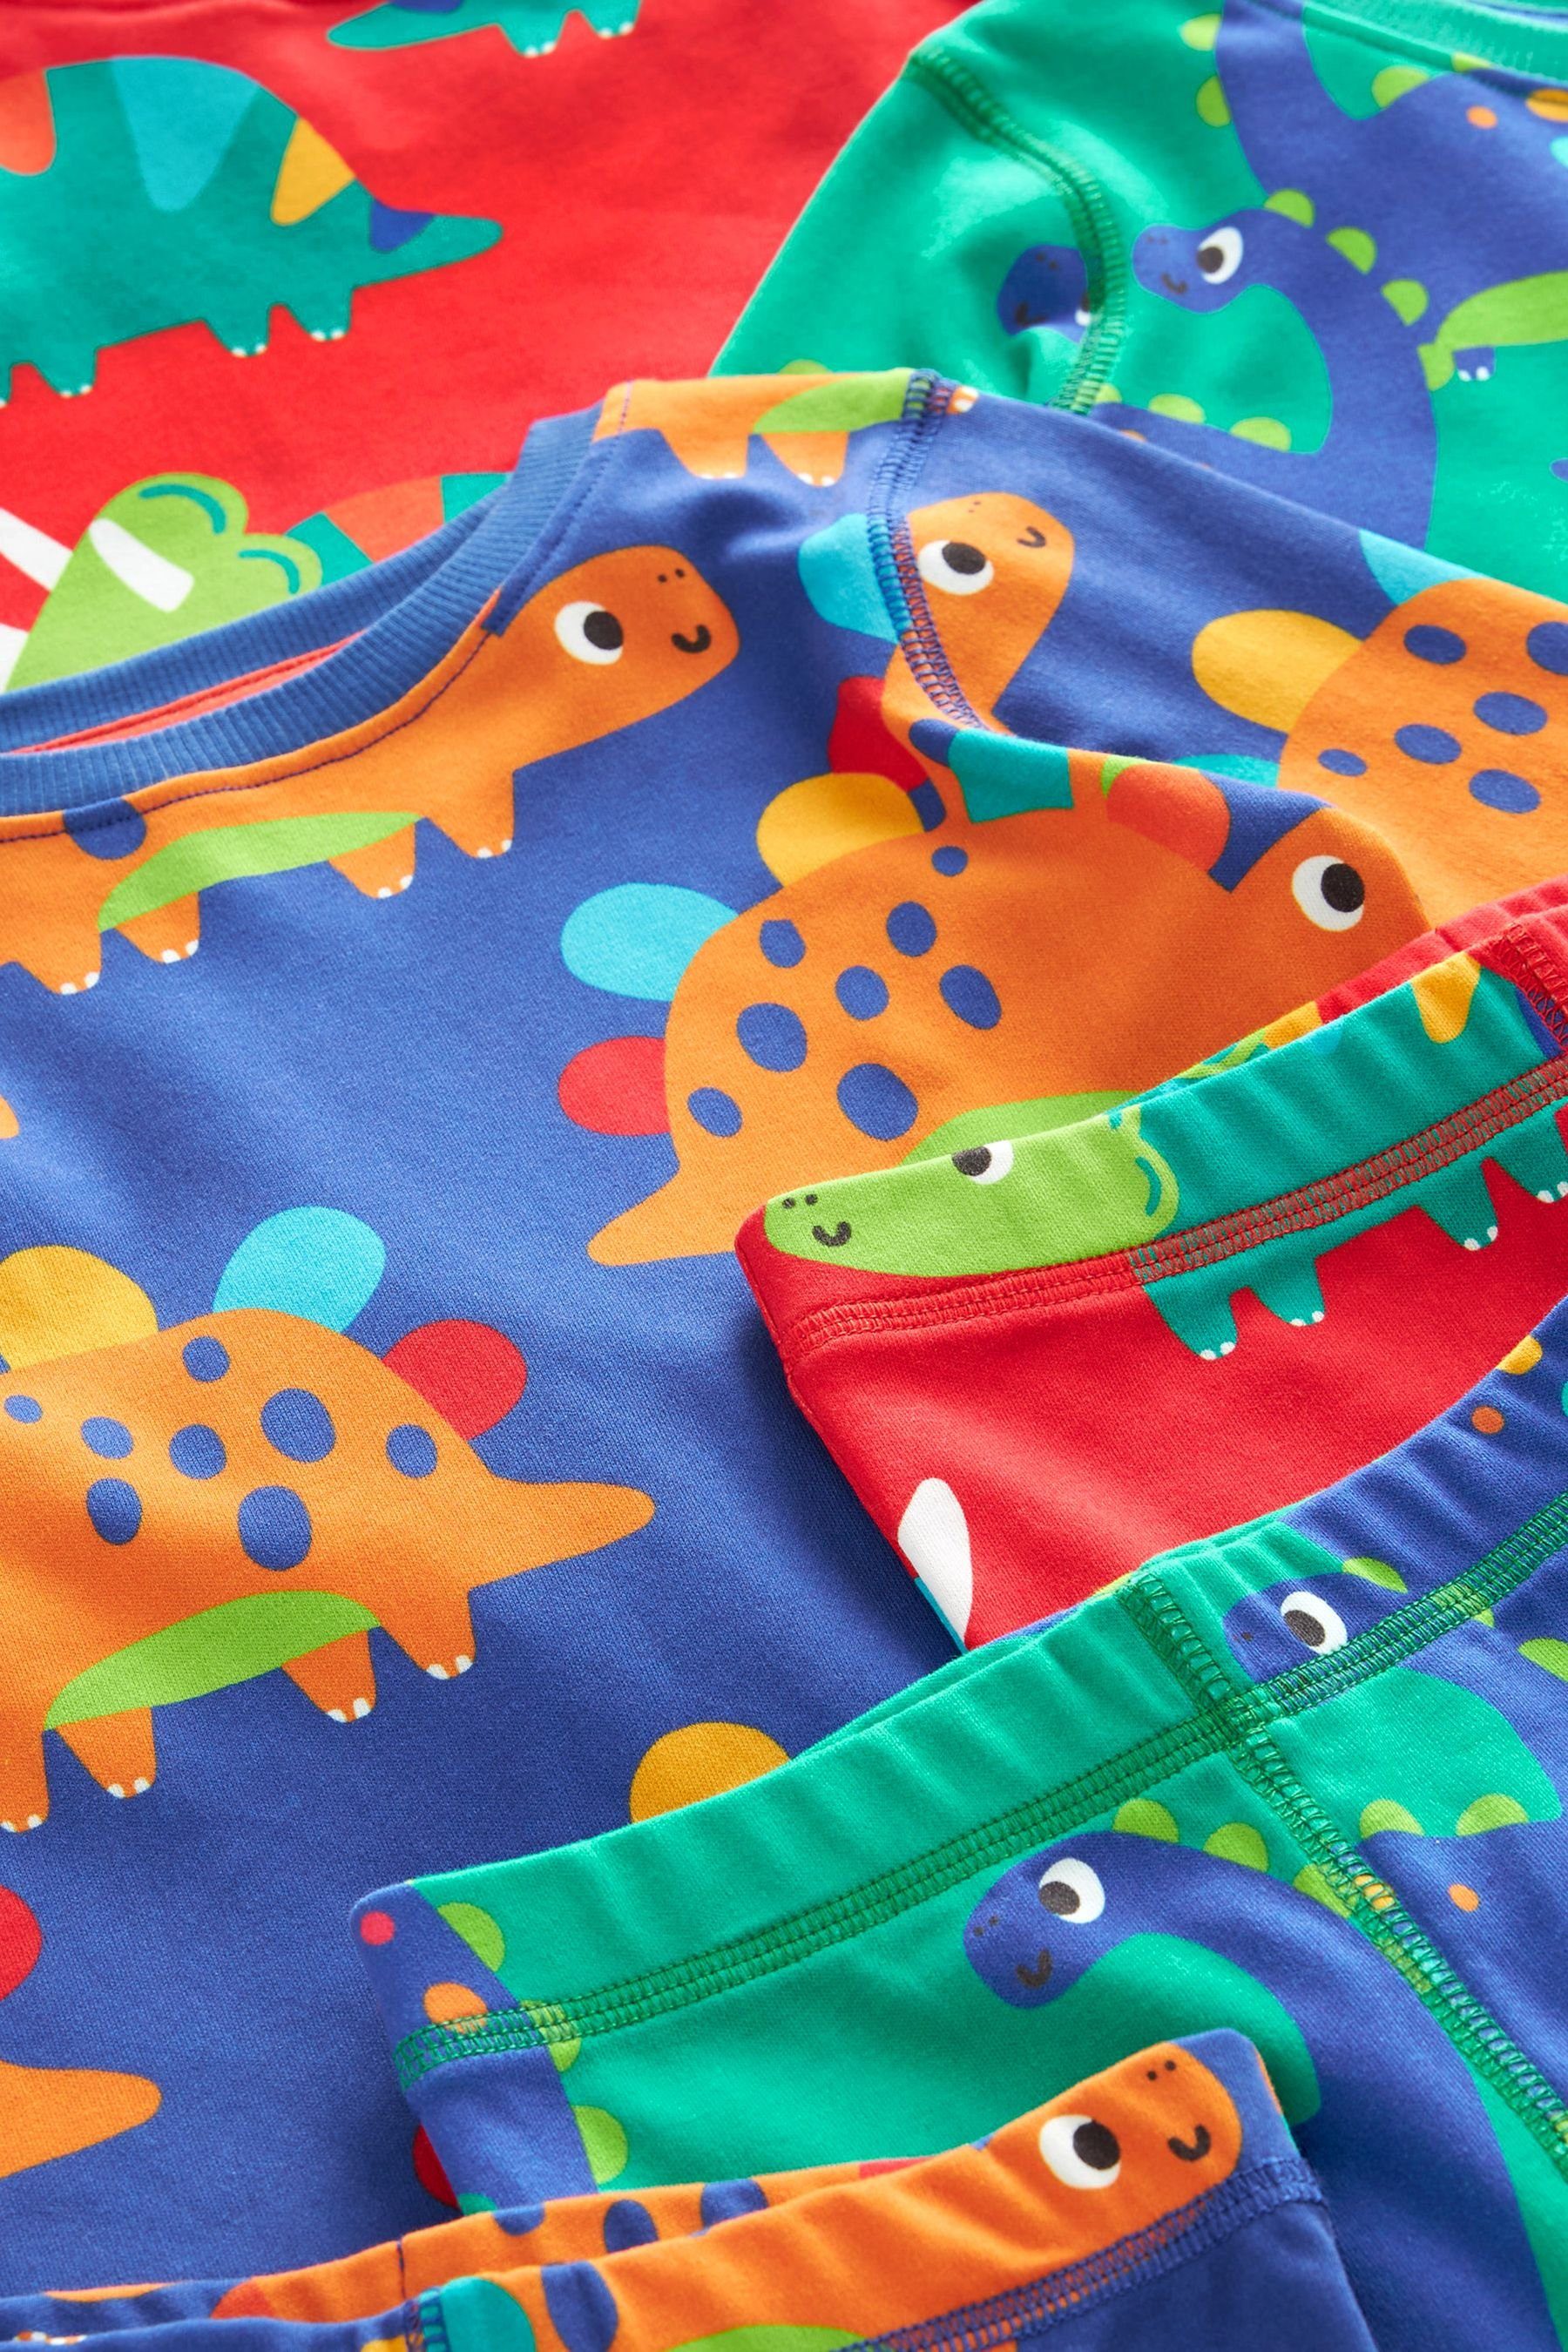 Next Pyjama 3er-Pack Snuggle Schlafanzüge Red/Blue/Green Dinosaur tlg) (6